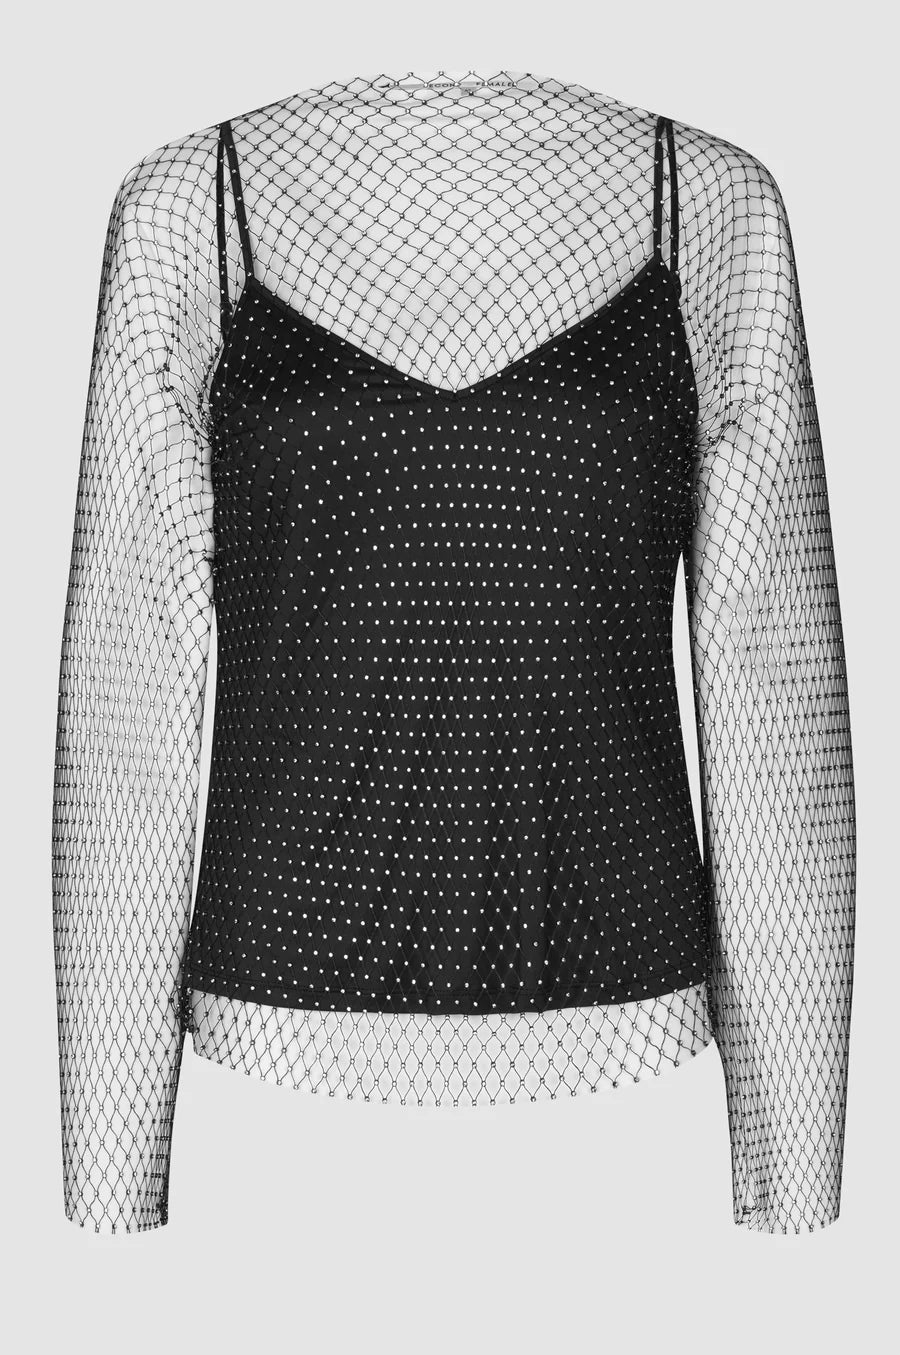 Rhinestone mesh top with detachable black vest top